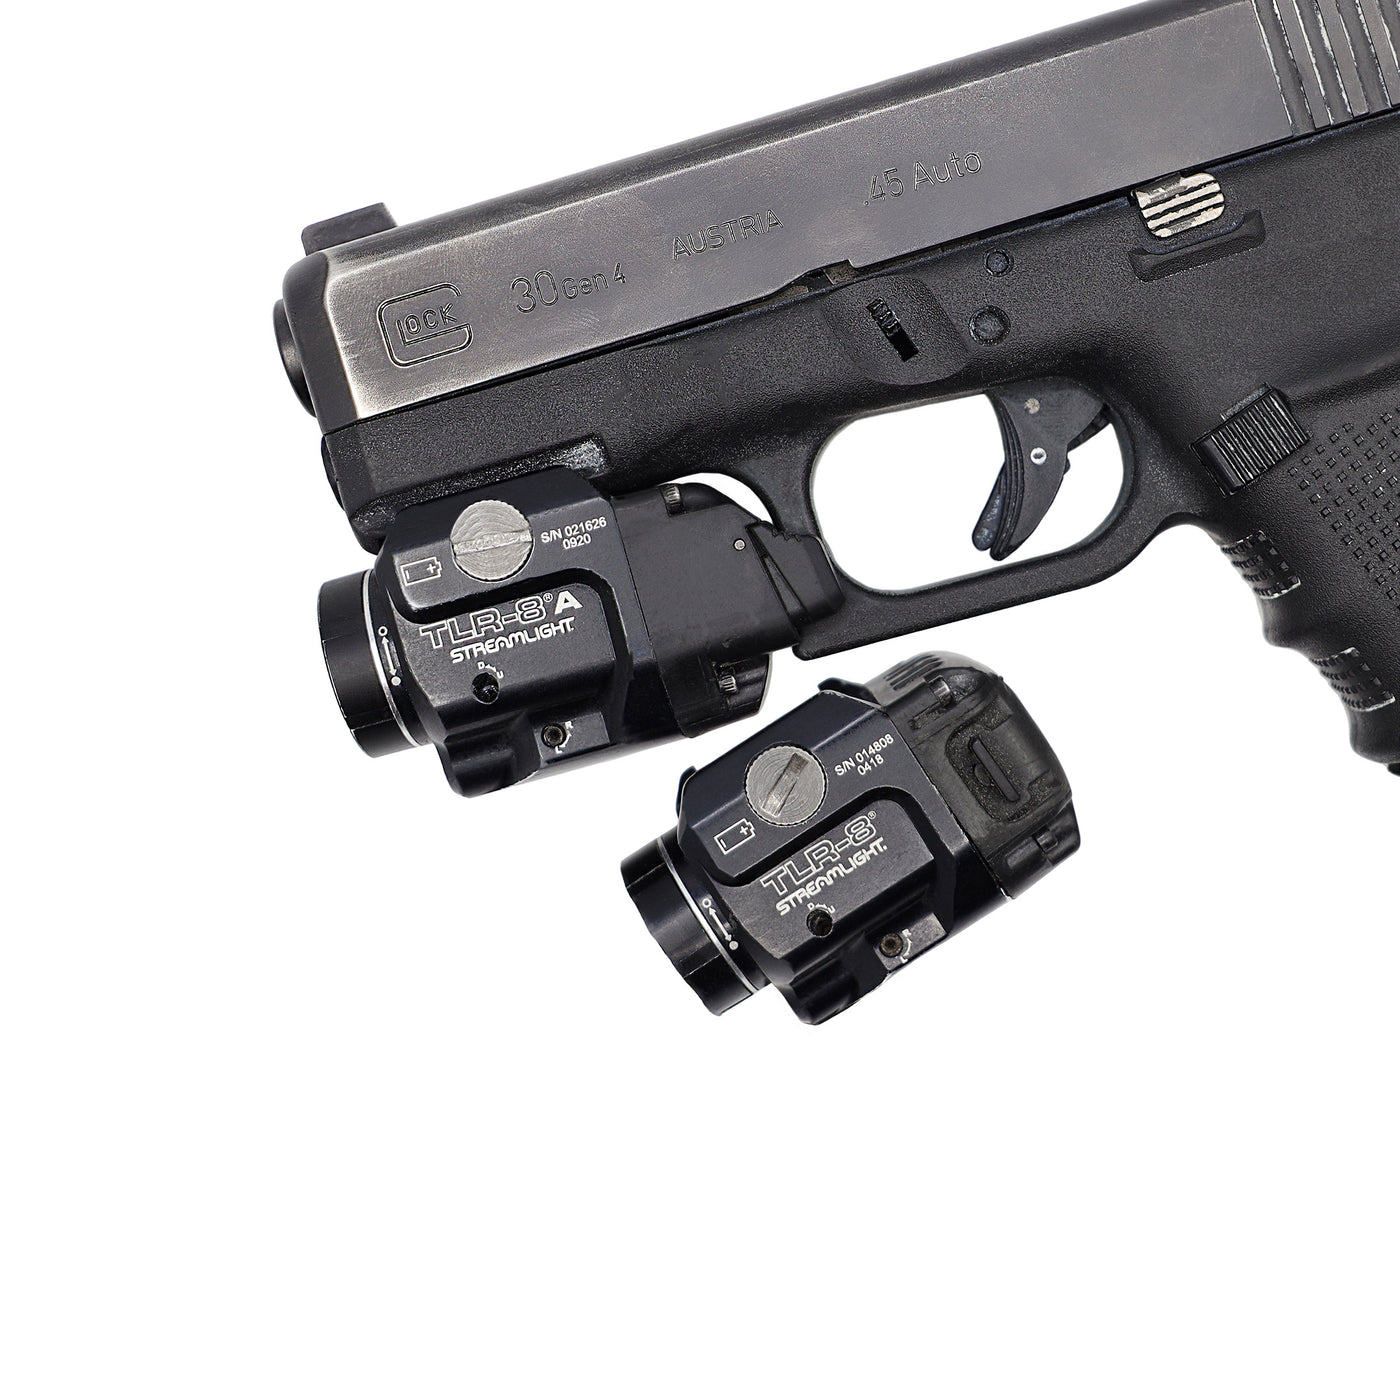 Glock 30 firearm with streamlight TLR8 weapon light